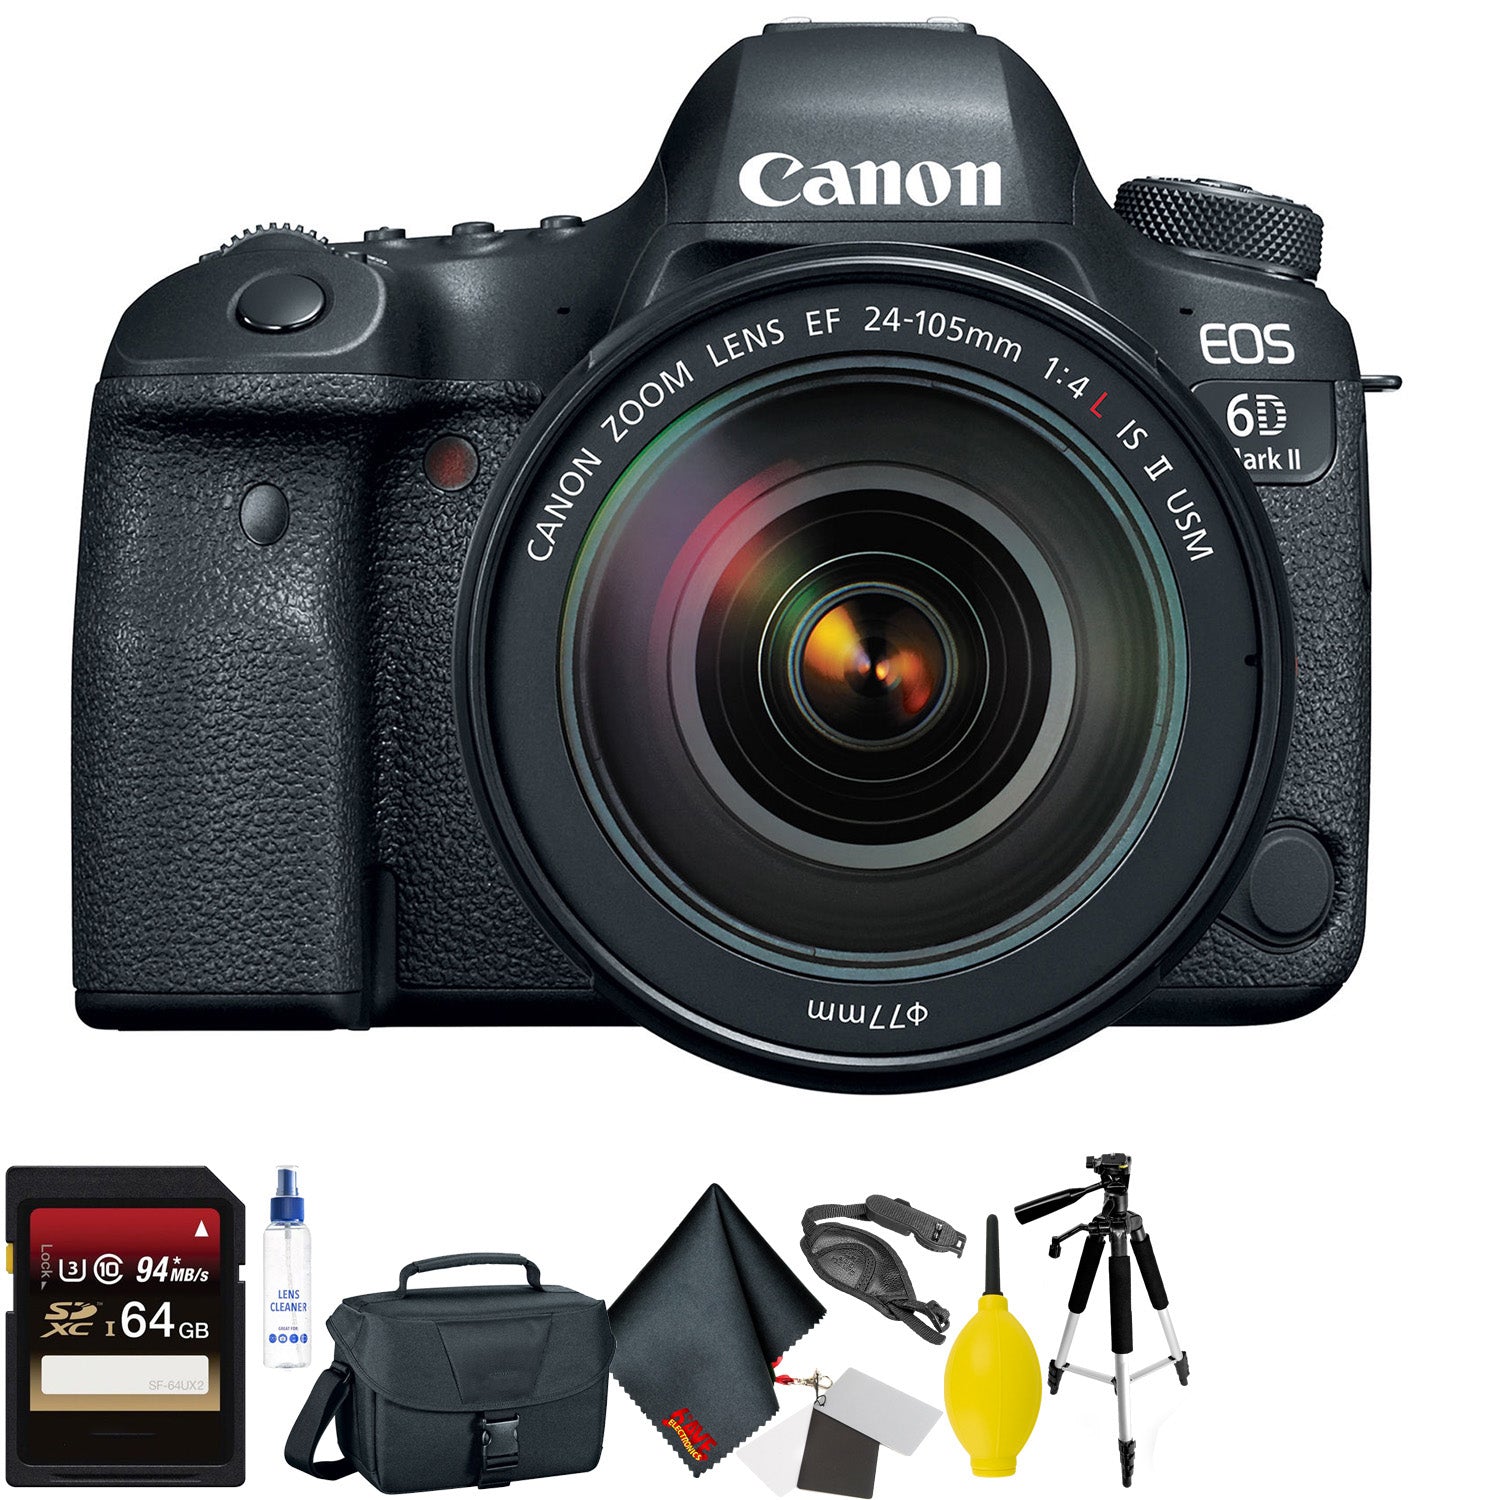 Canon EOS 6D Mark II DSLR Camera with 24-105mm f/4L II Lens + 64GB Memory Card + Mega Accessory Kit + 1 Year Warranty